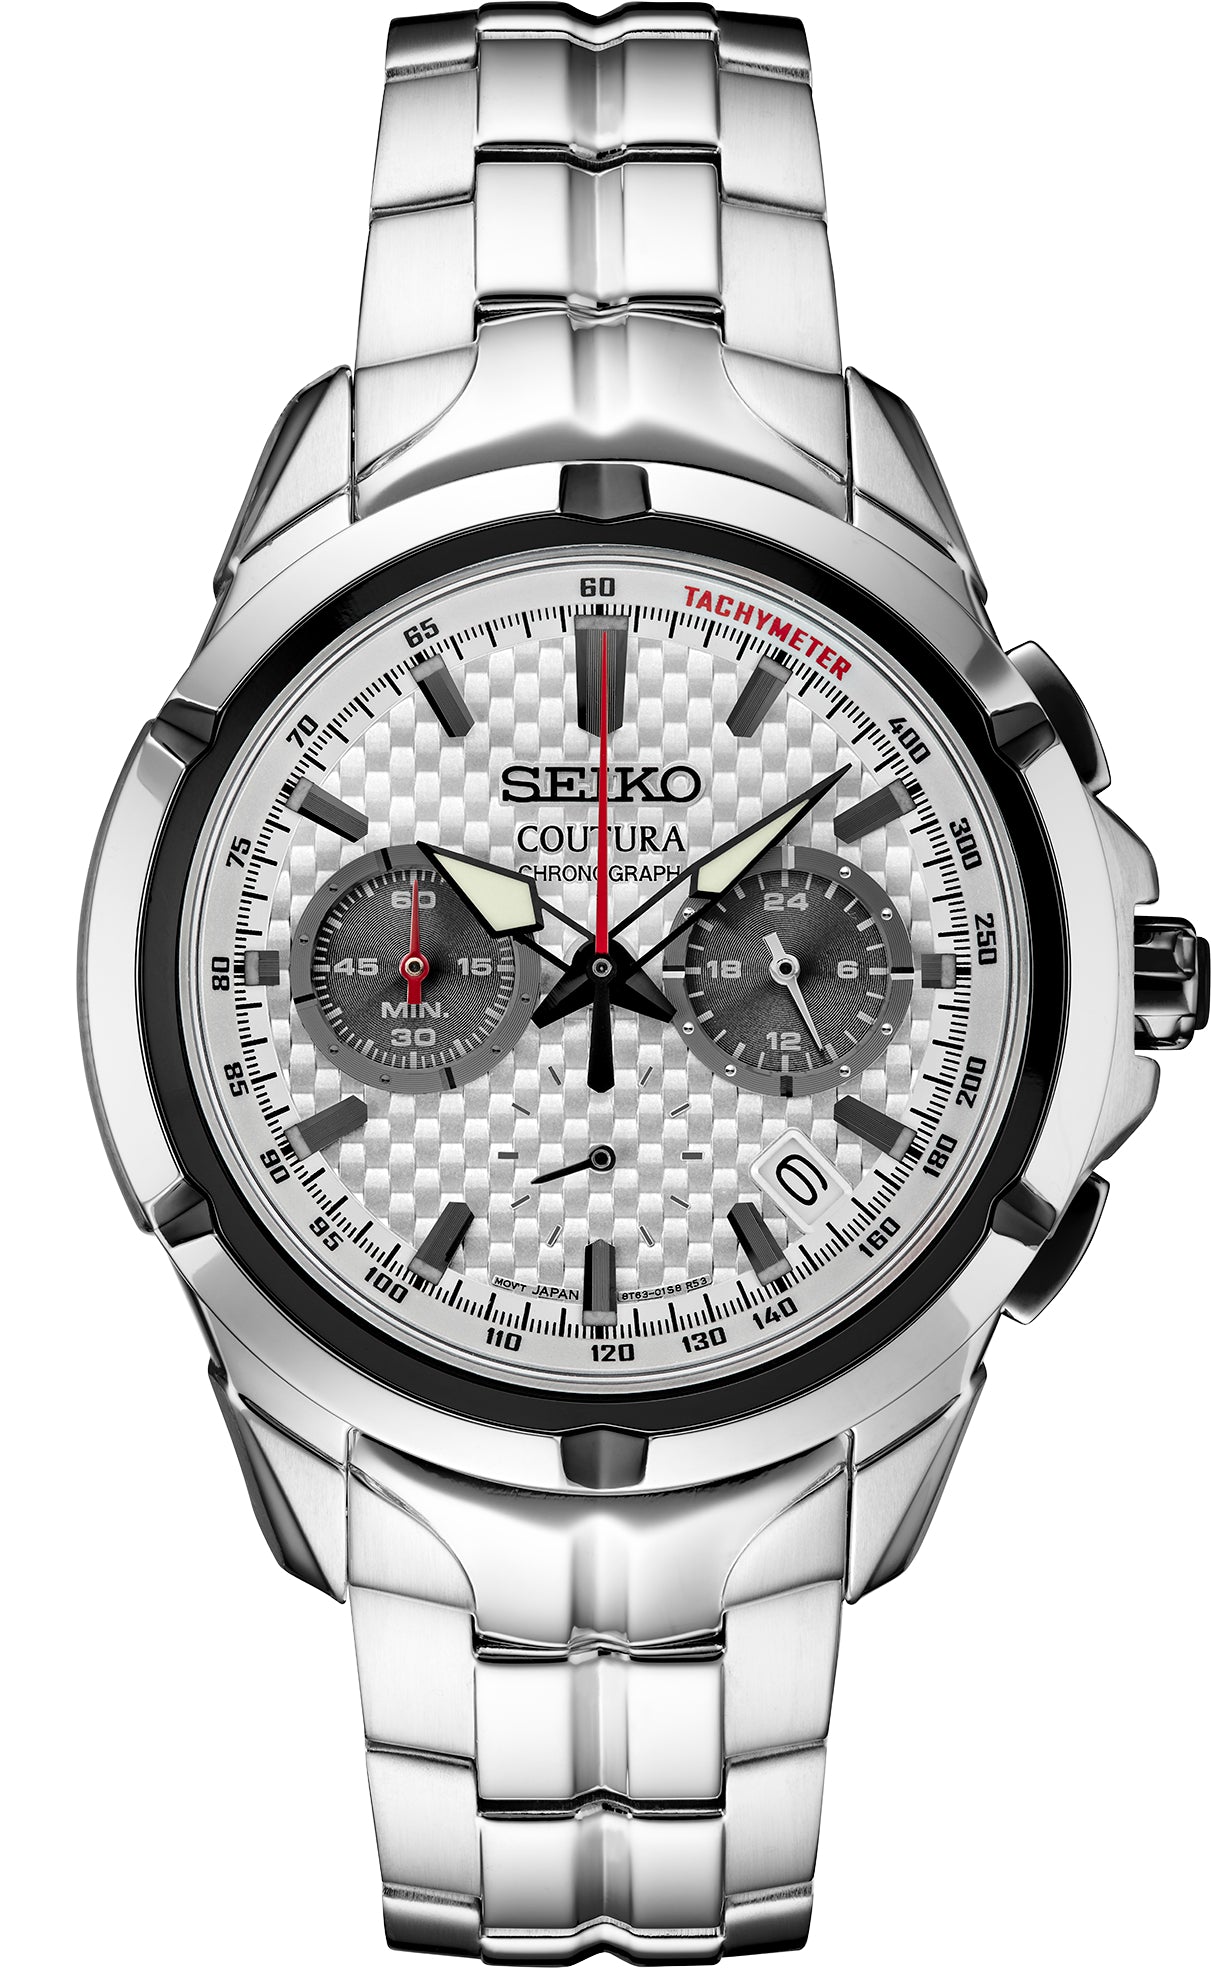 Gts Seiko SSB433 Coutura SS Quartz Chronograph Silver Dial Watch